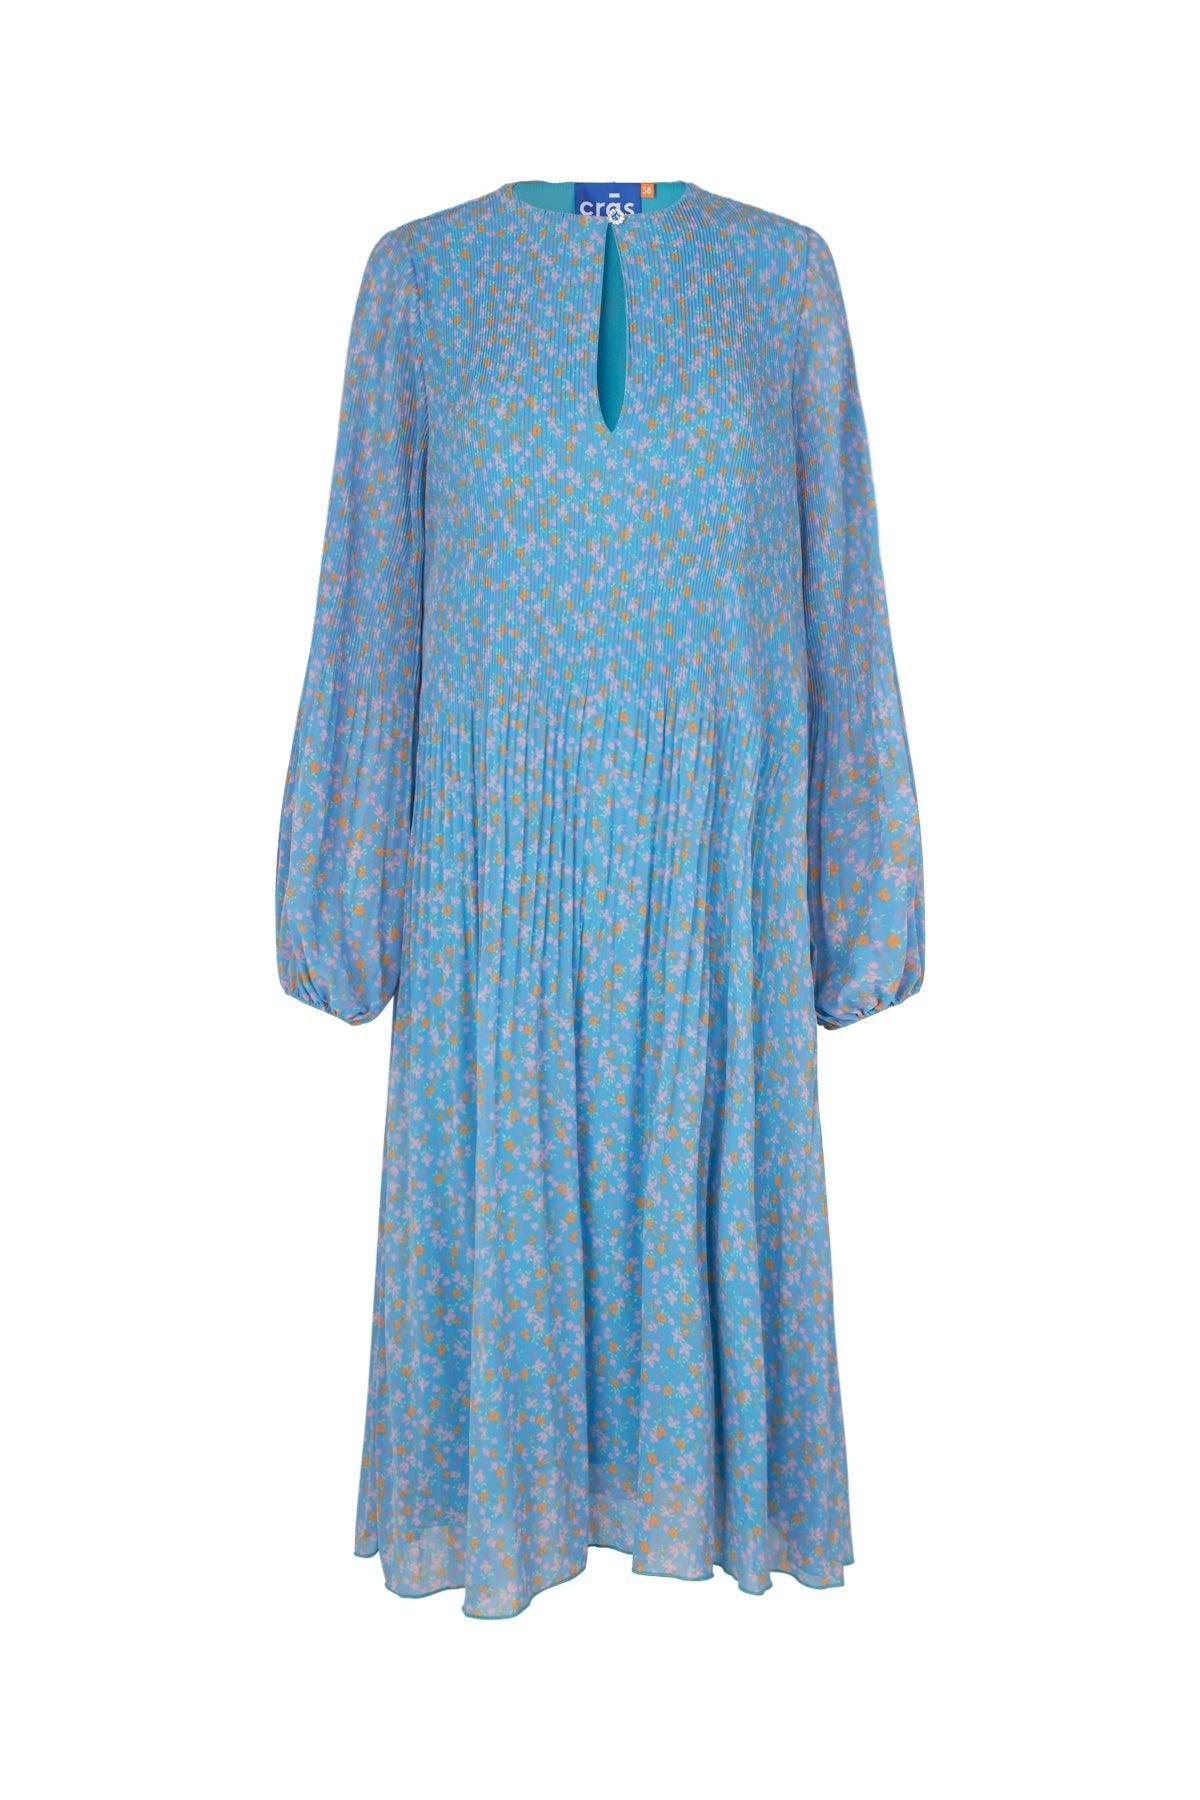 Melindacras Dress Floral Blue - No22 Damplassen